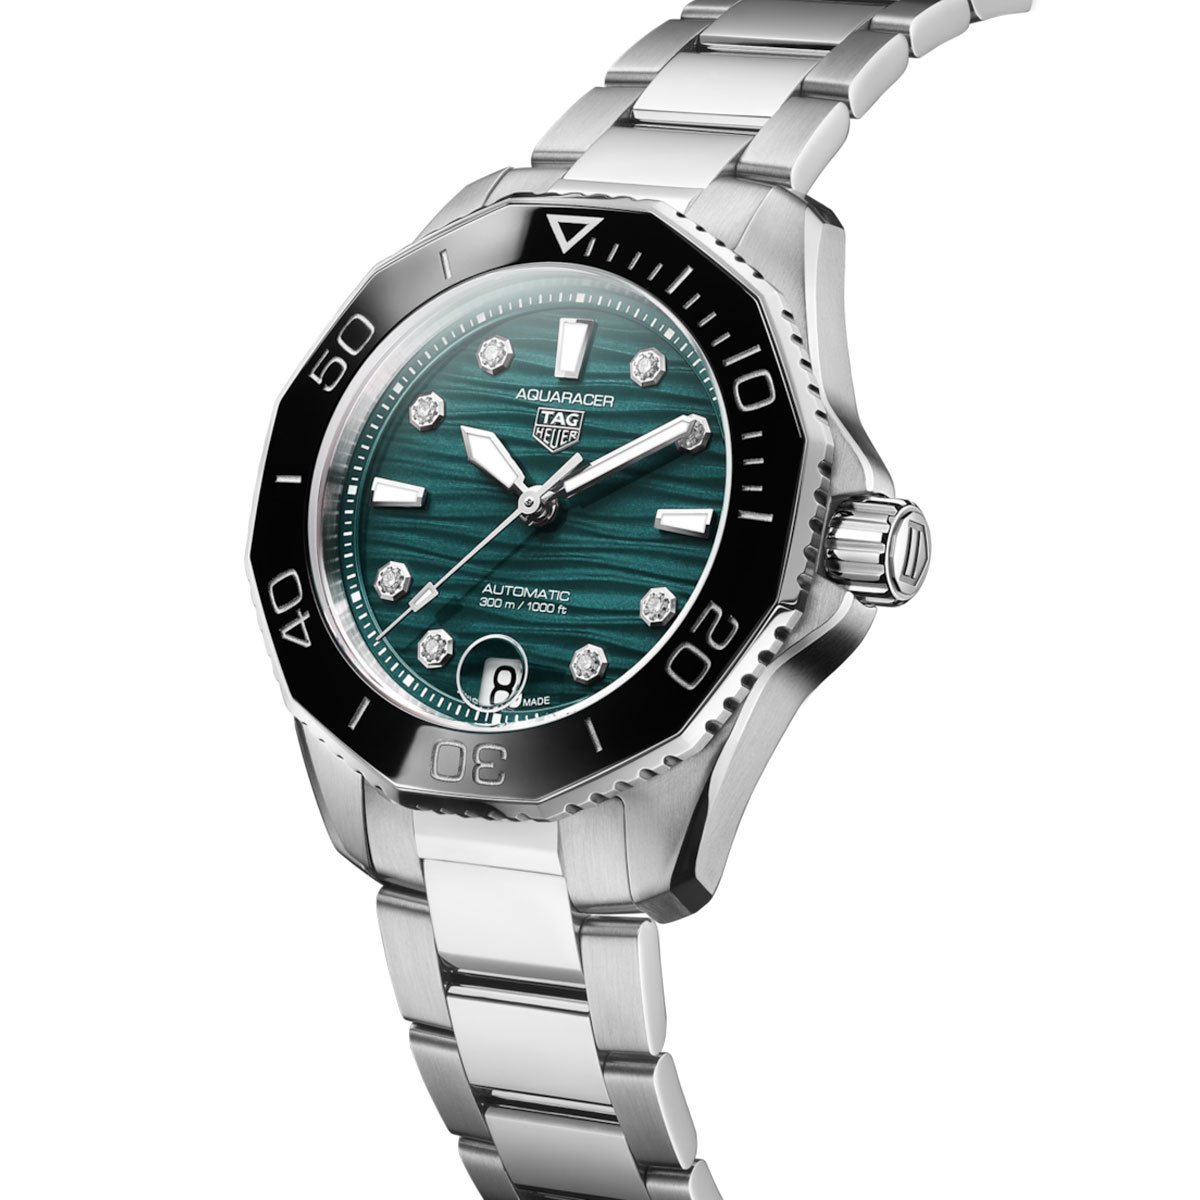 Aquaracer Professional 300 UK Edition 36mm Watch